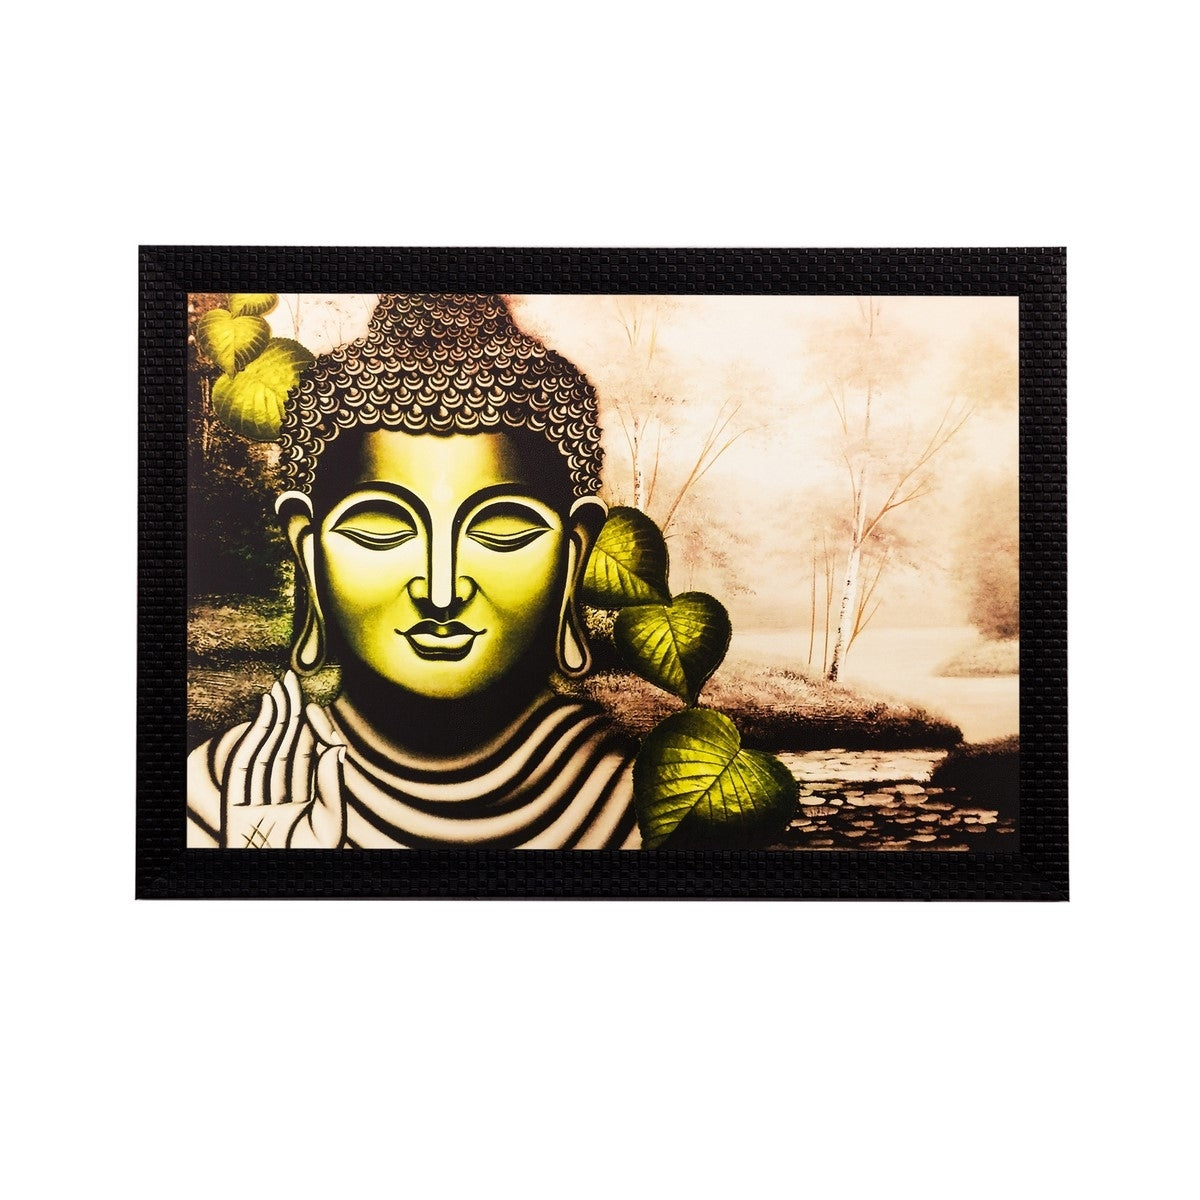 Meditating Lord Buddha Matt Textured UV Art Painting